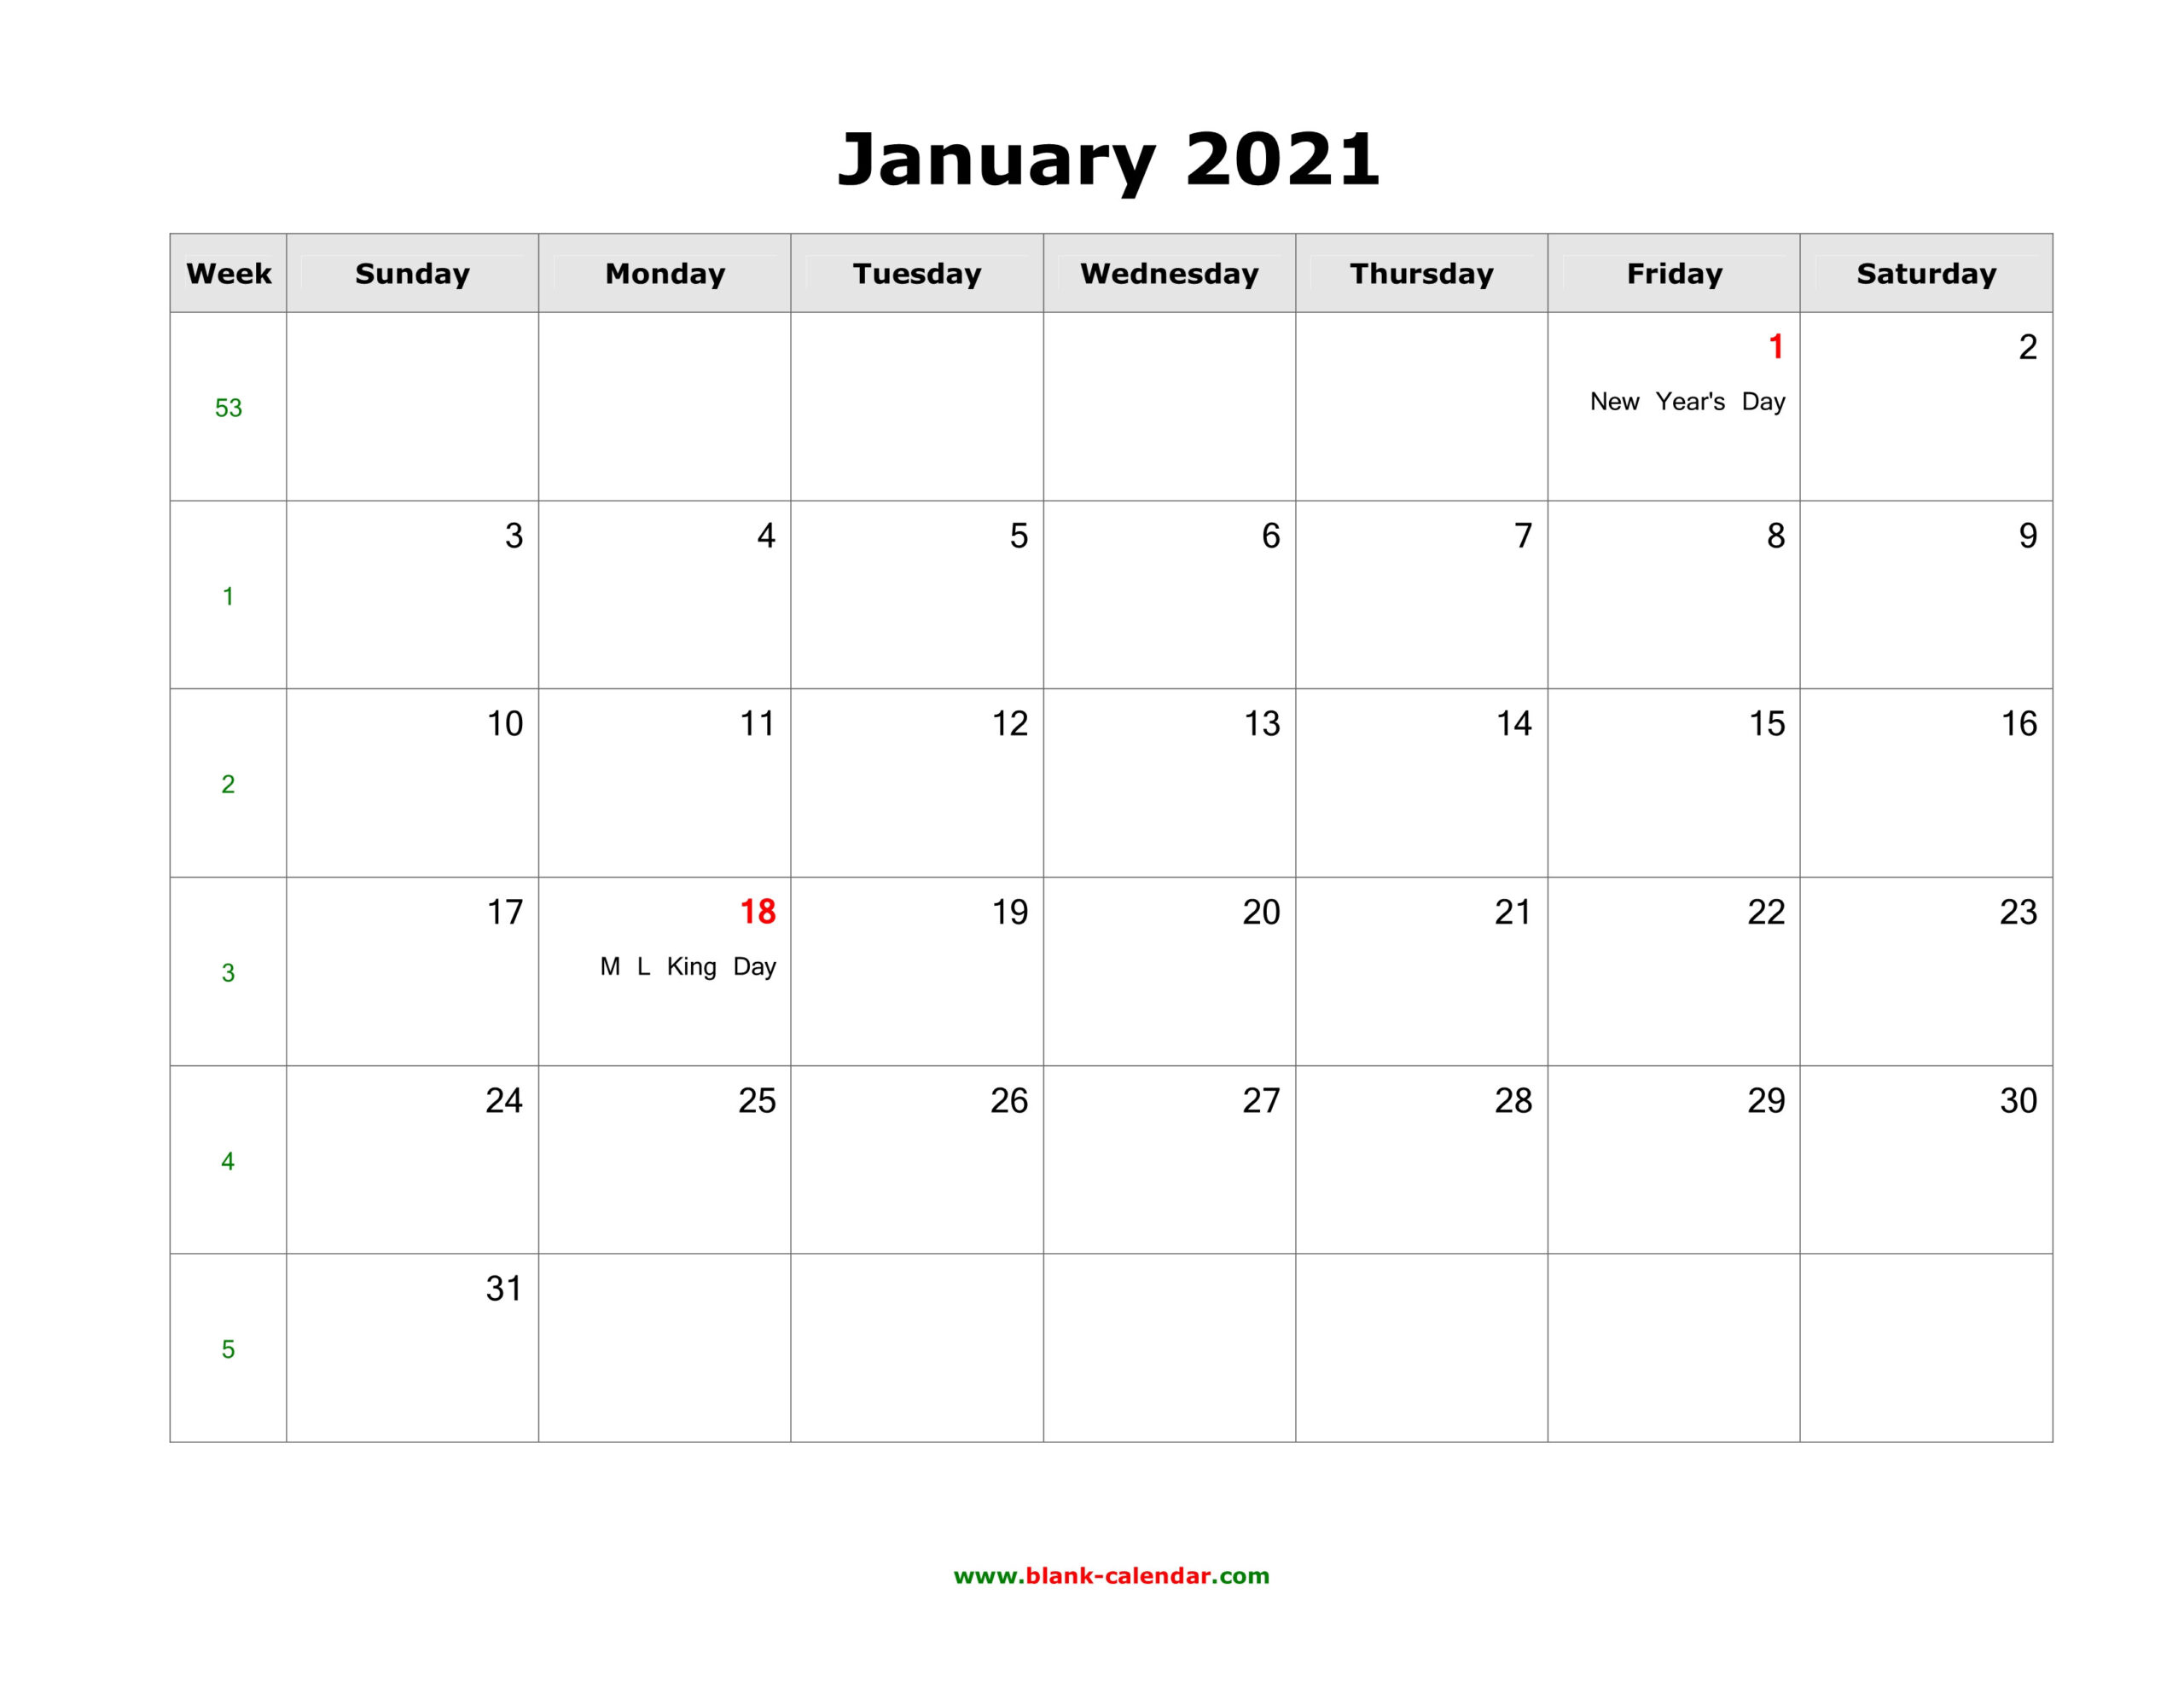 January 2021 Blank Calendar | Free Download Calendar Templates-January 2021 Calendar